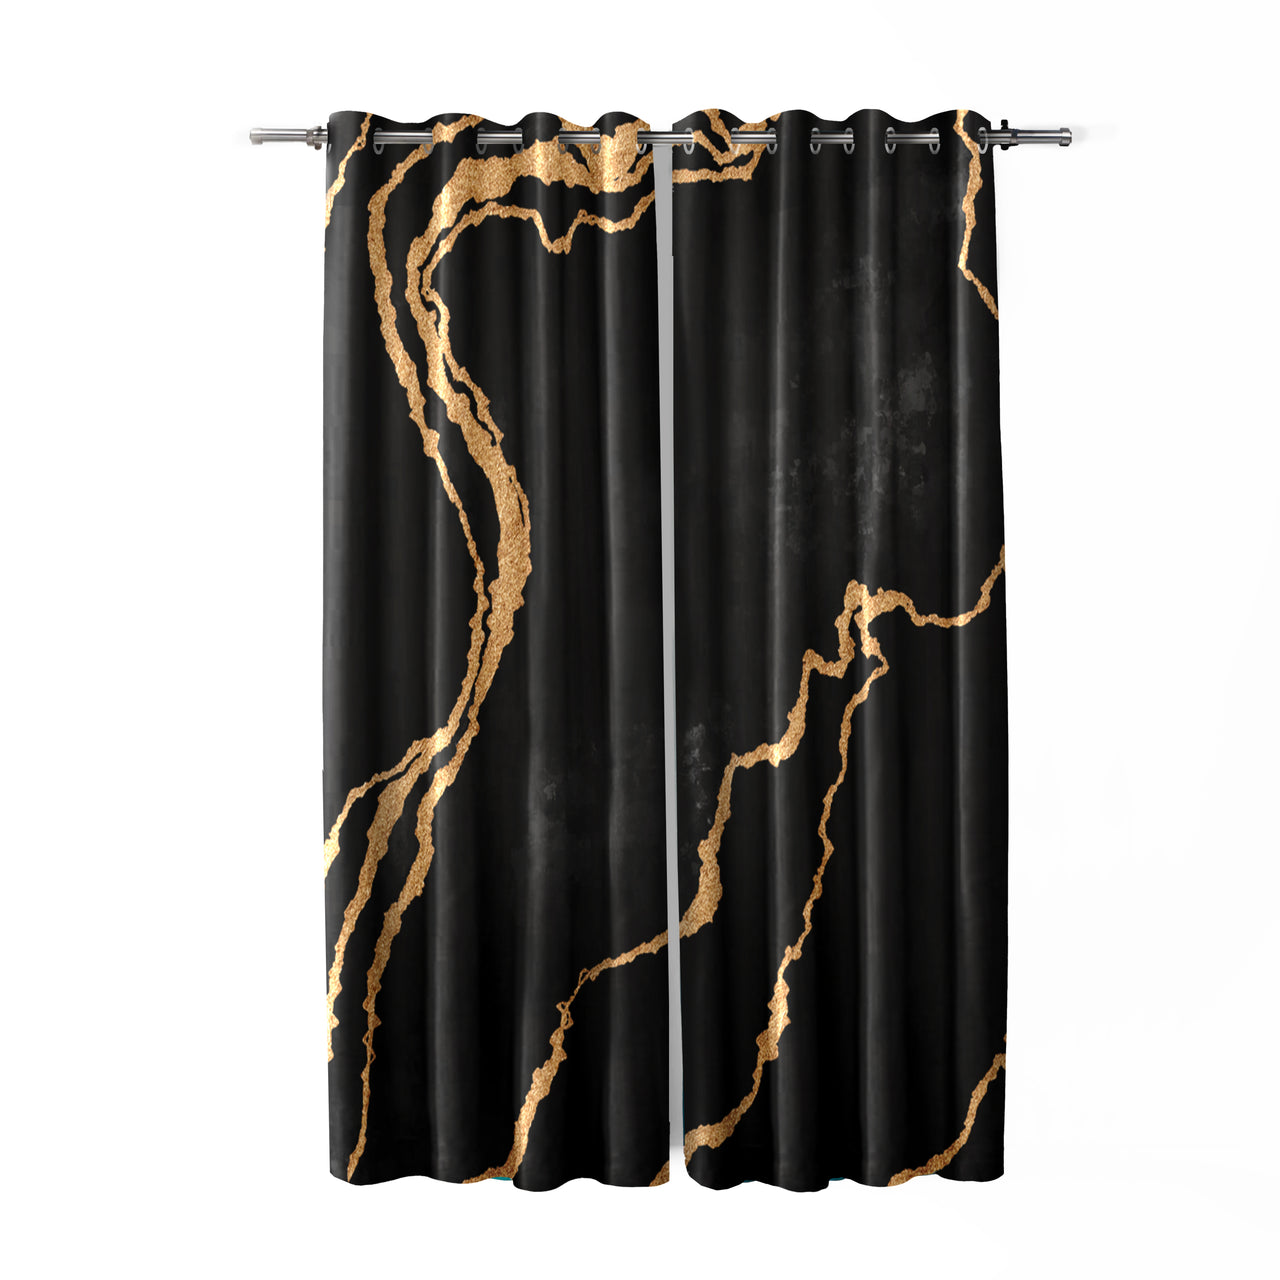 New Black Gold Abstarct Curtains